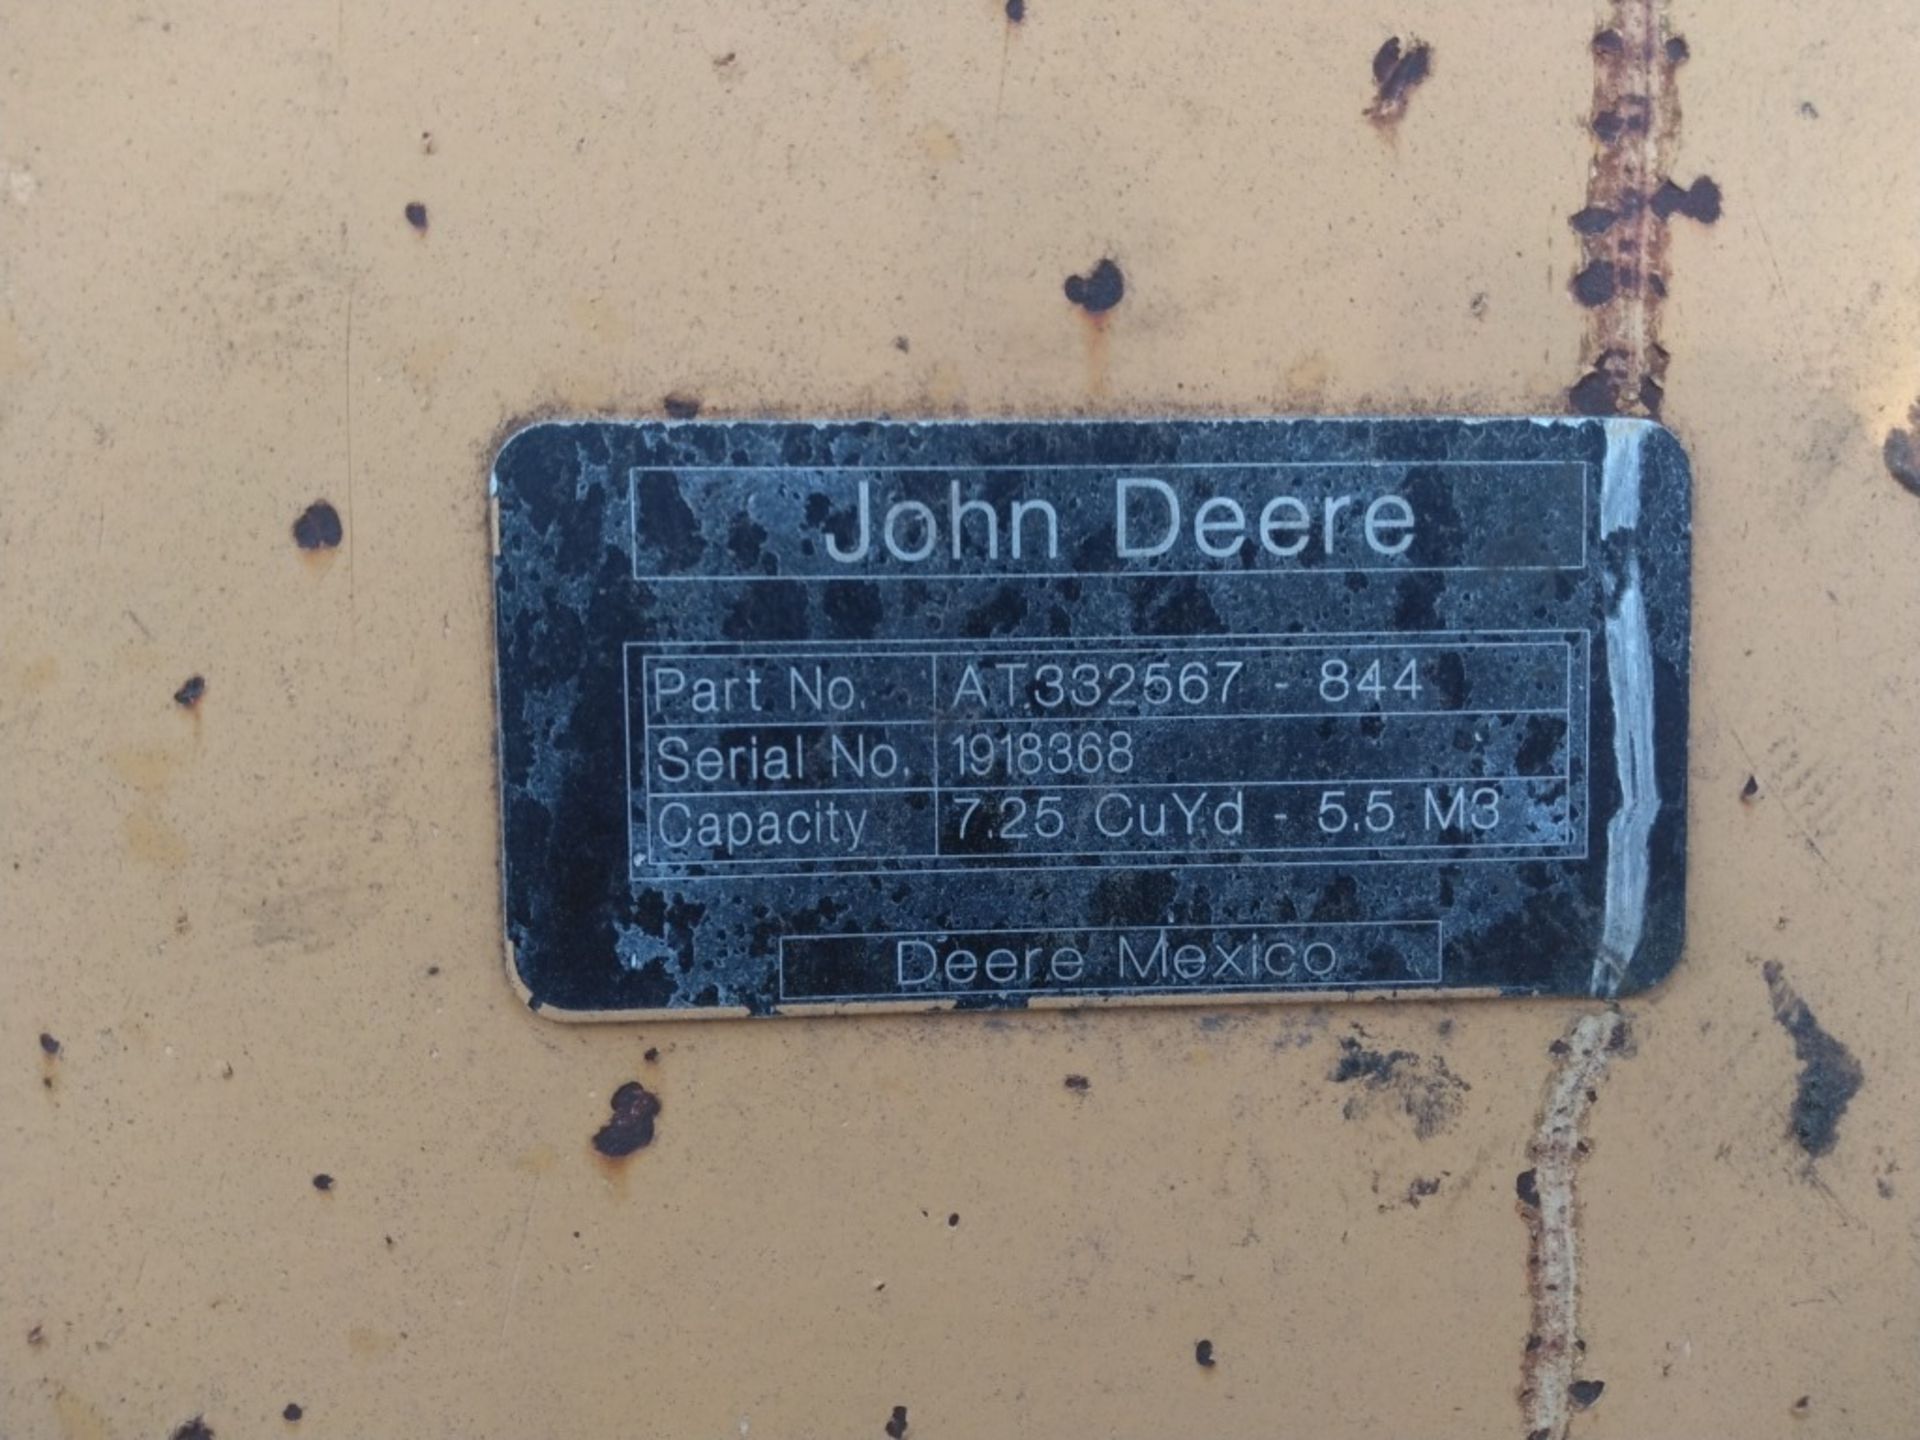 John Deere 844K Wheel Loader - Image 13 of 56